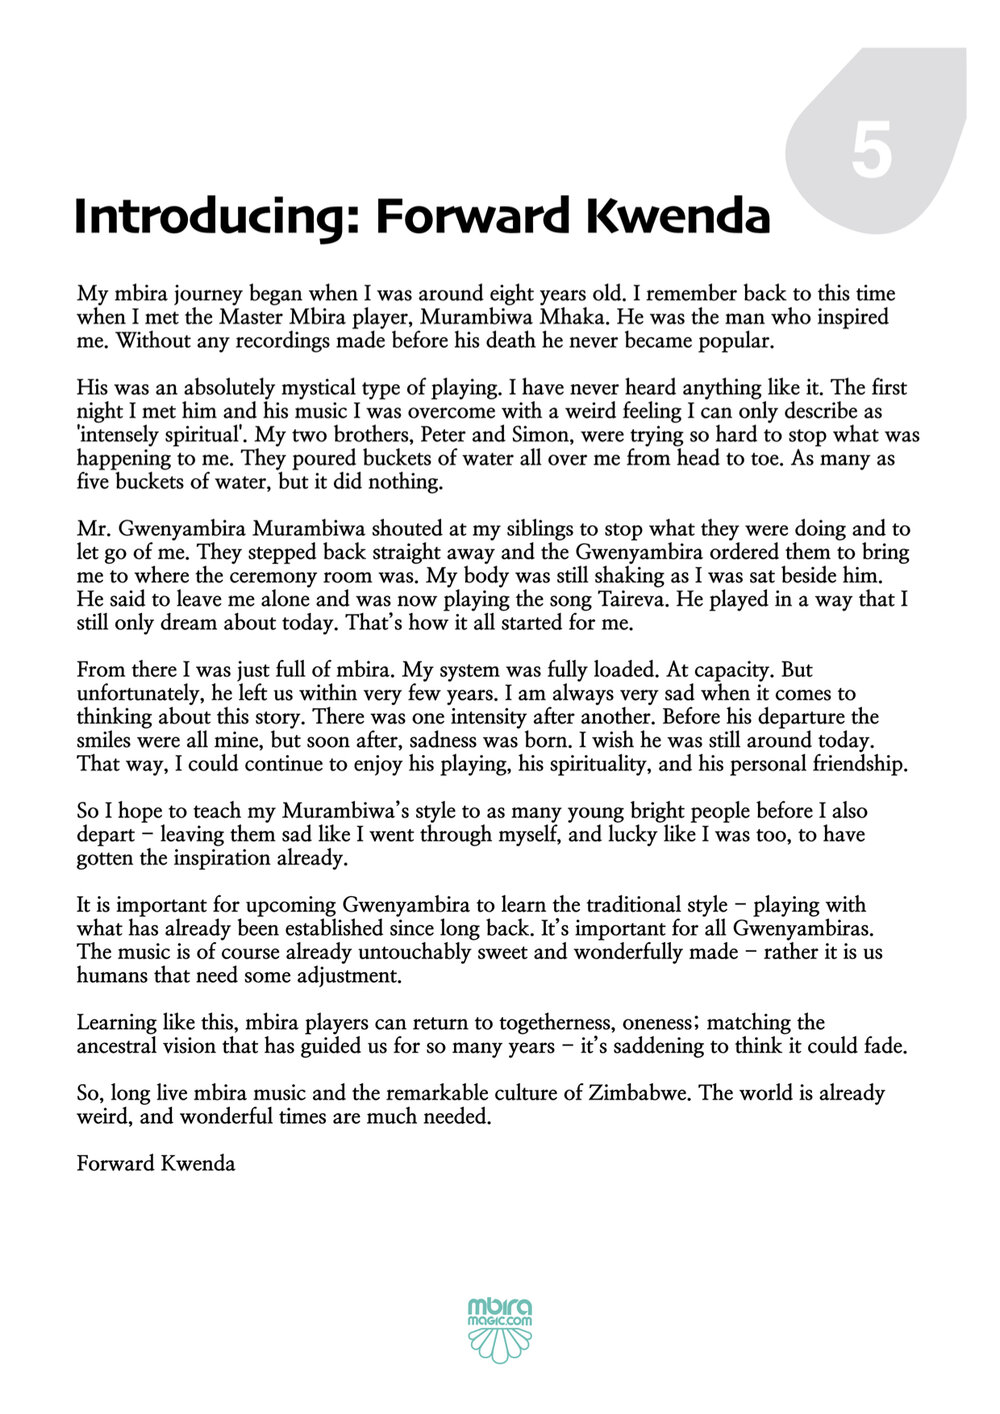 Forward Kwenda Mbira Magic.jpg